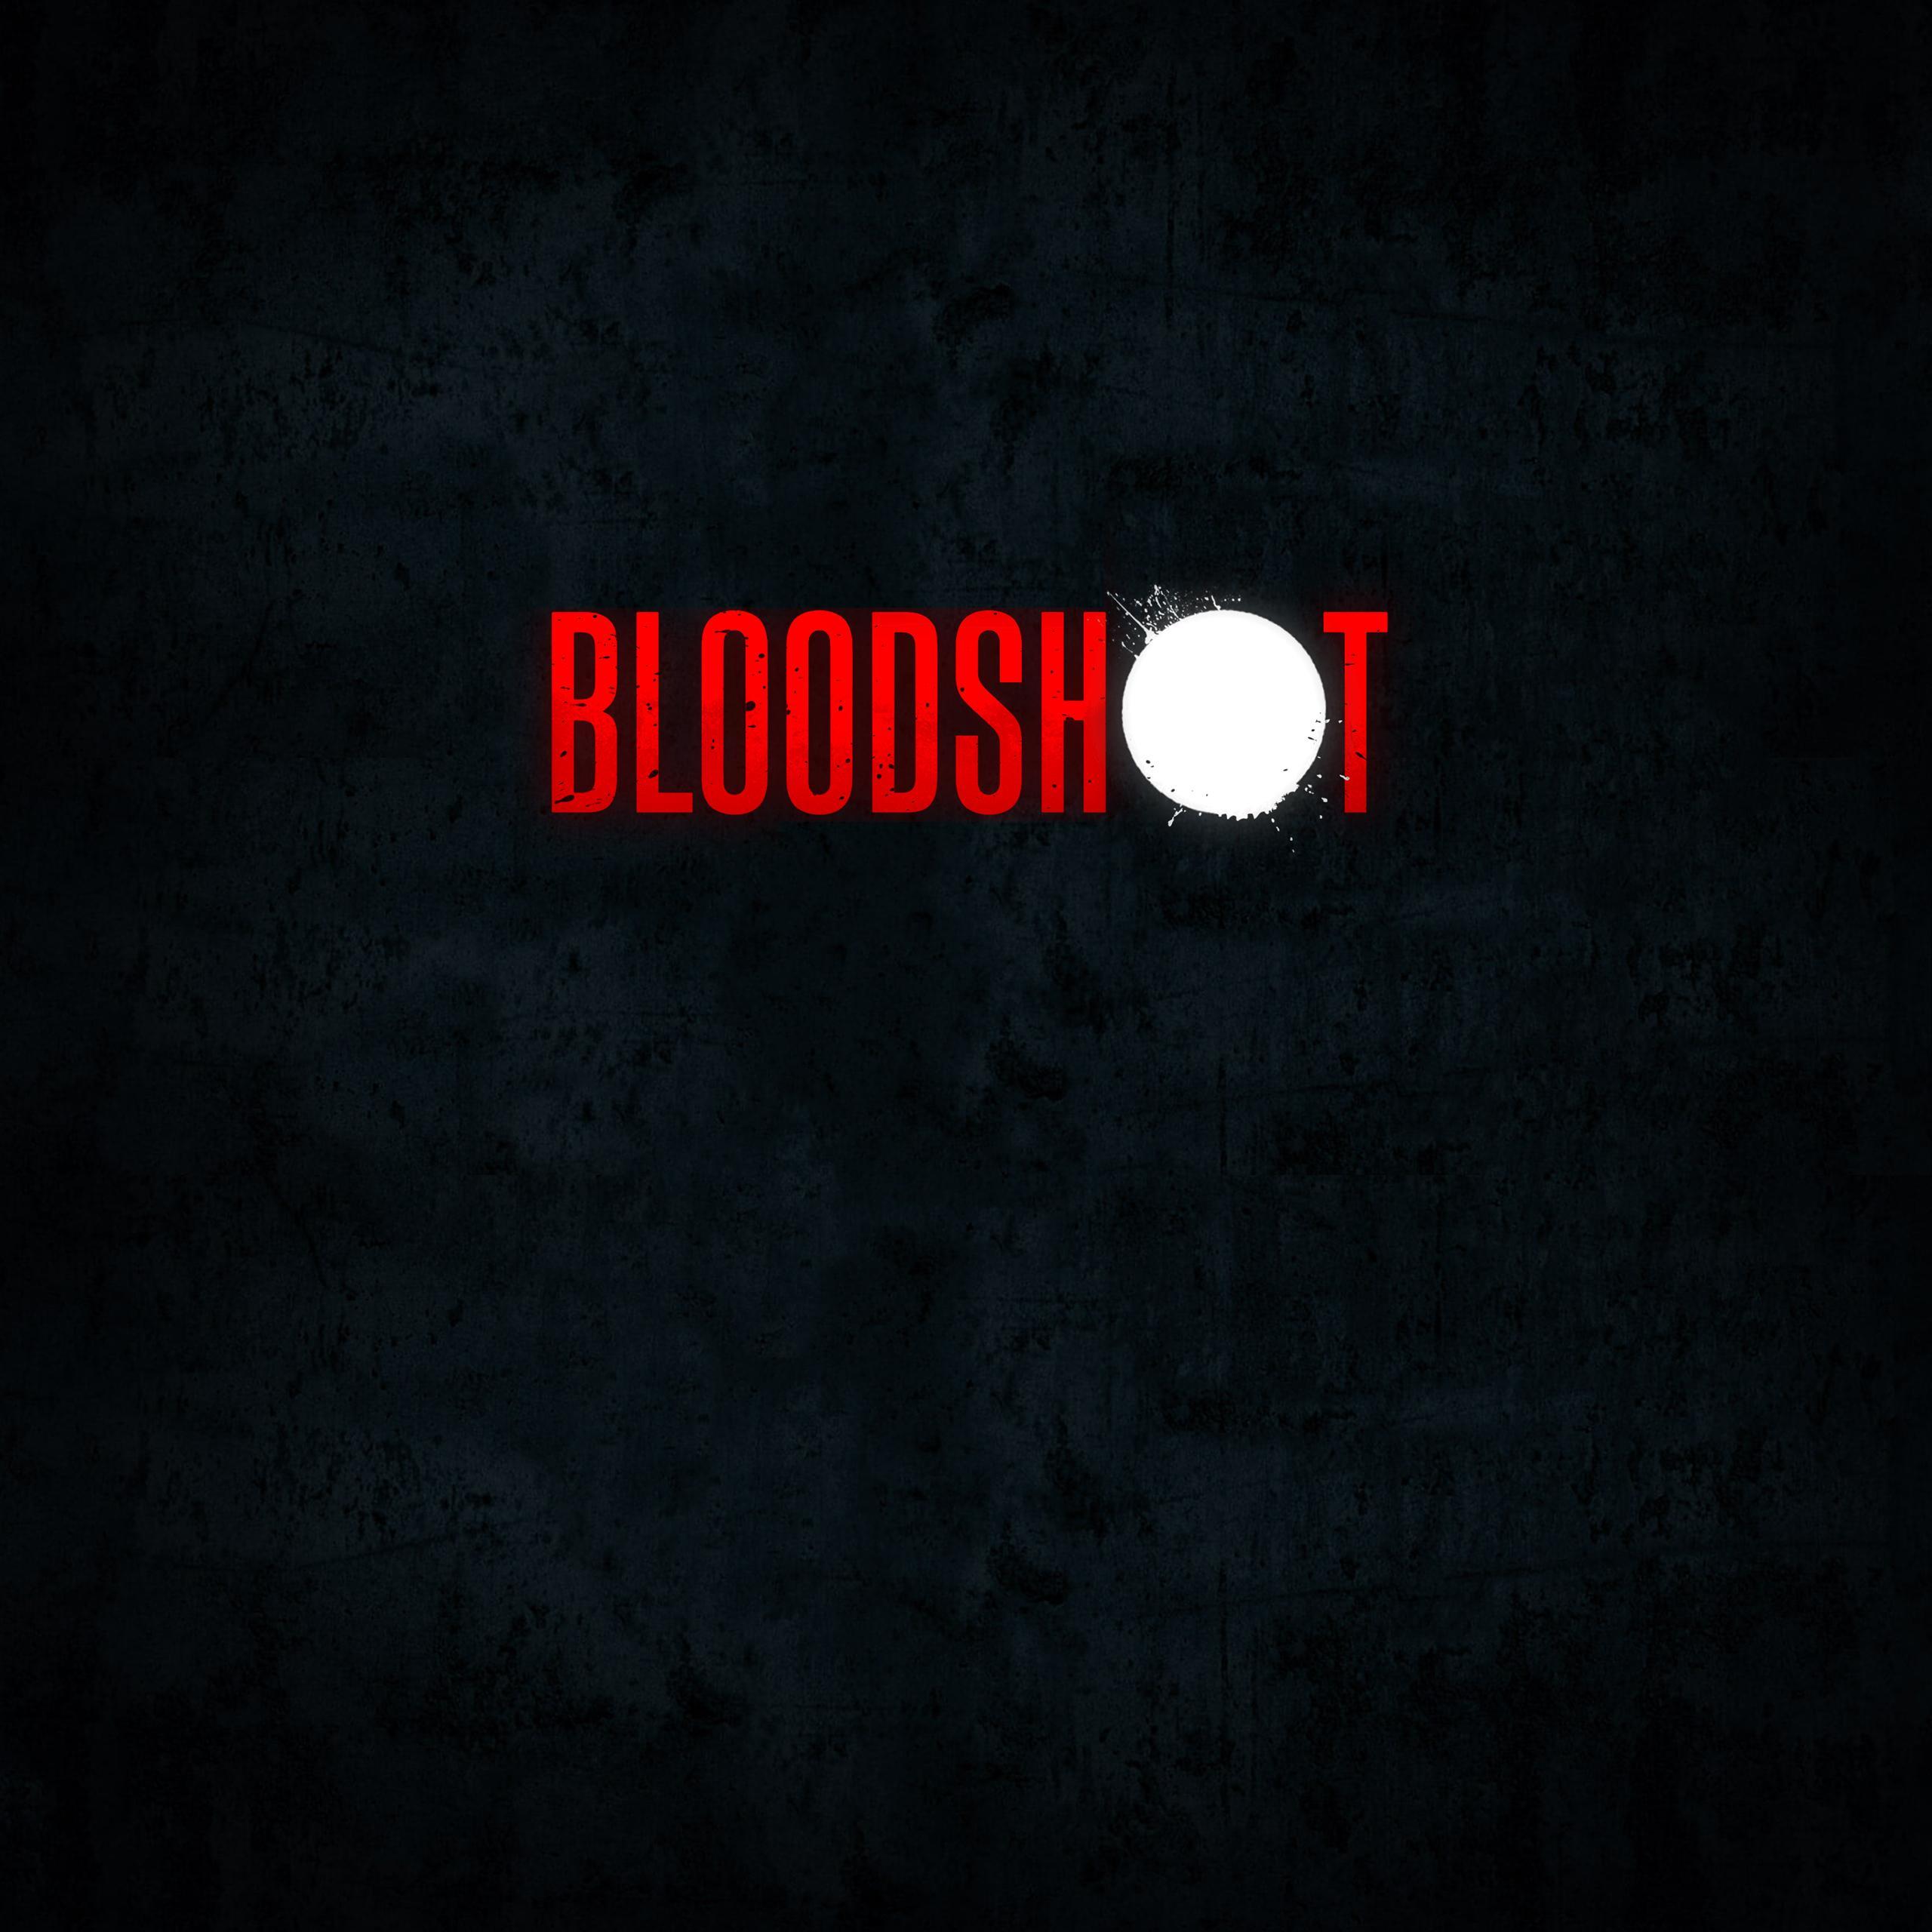 Bloodshot Wallpaper Free Bloodshot Background